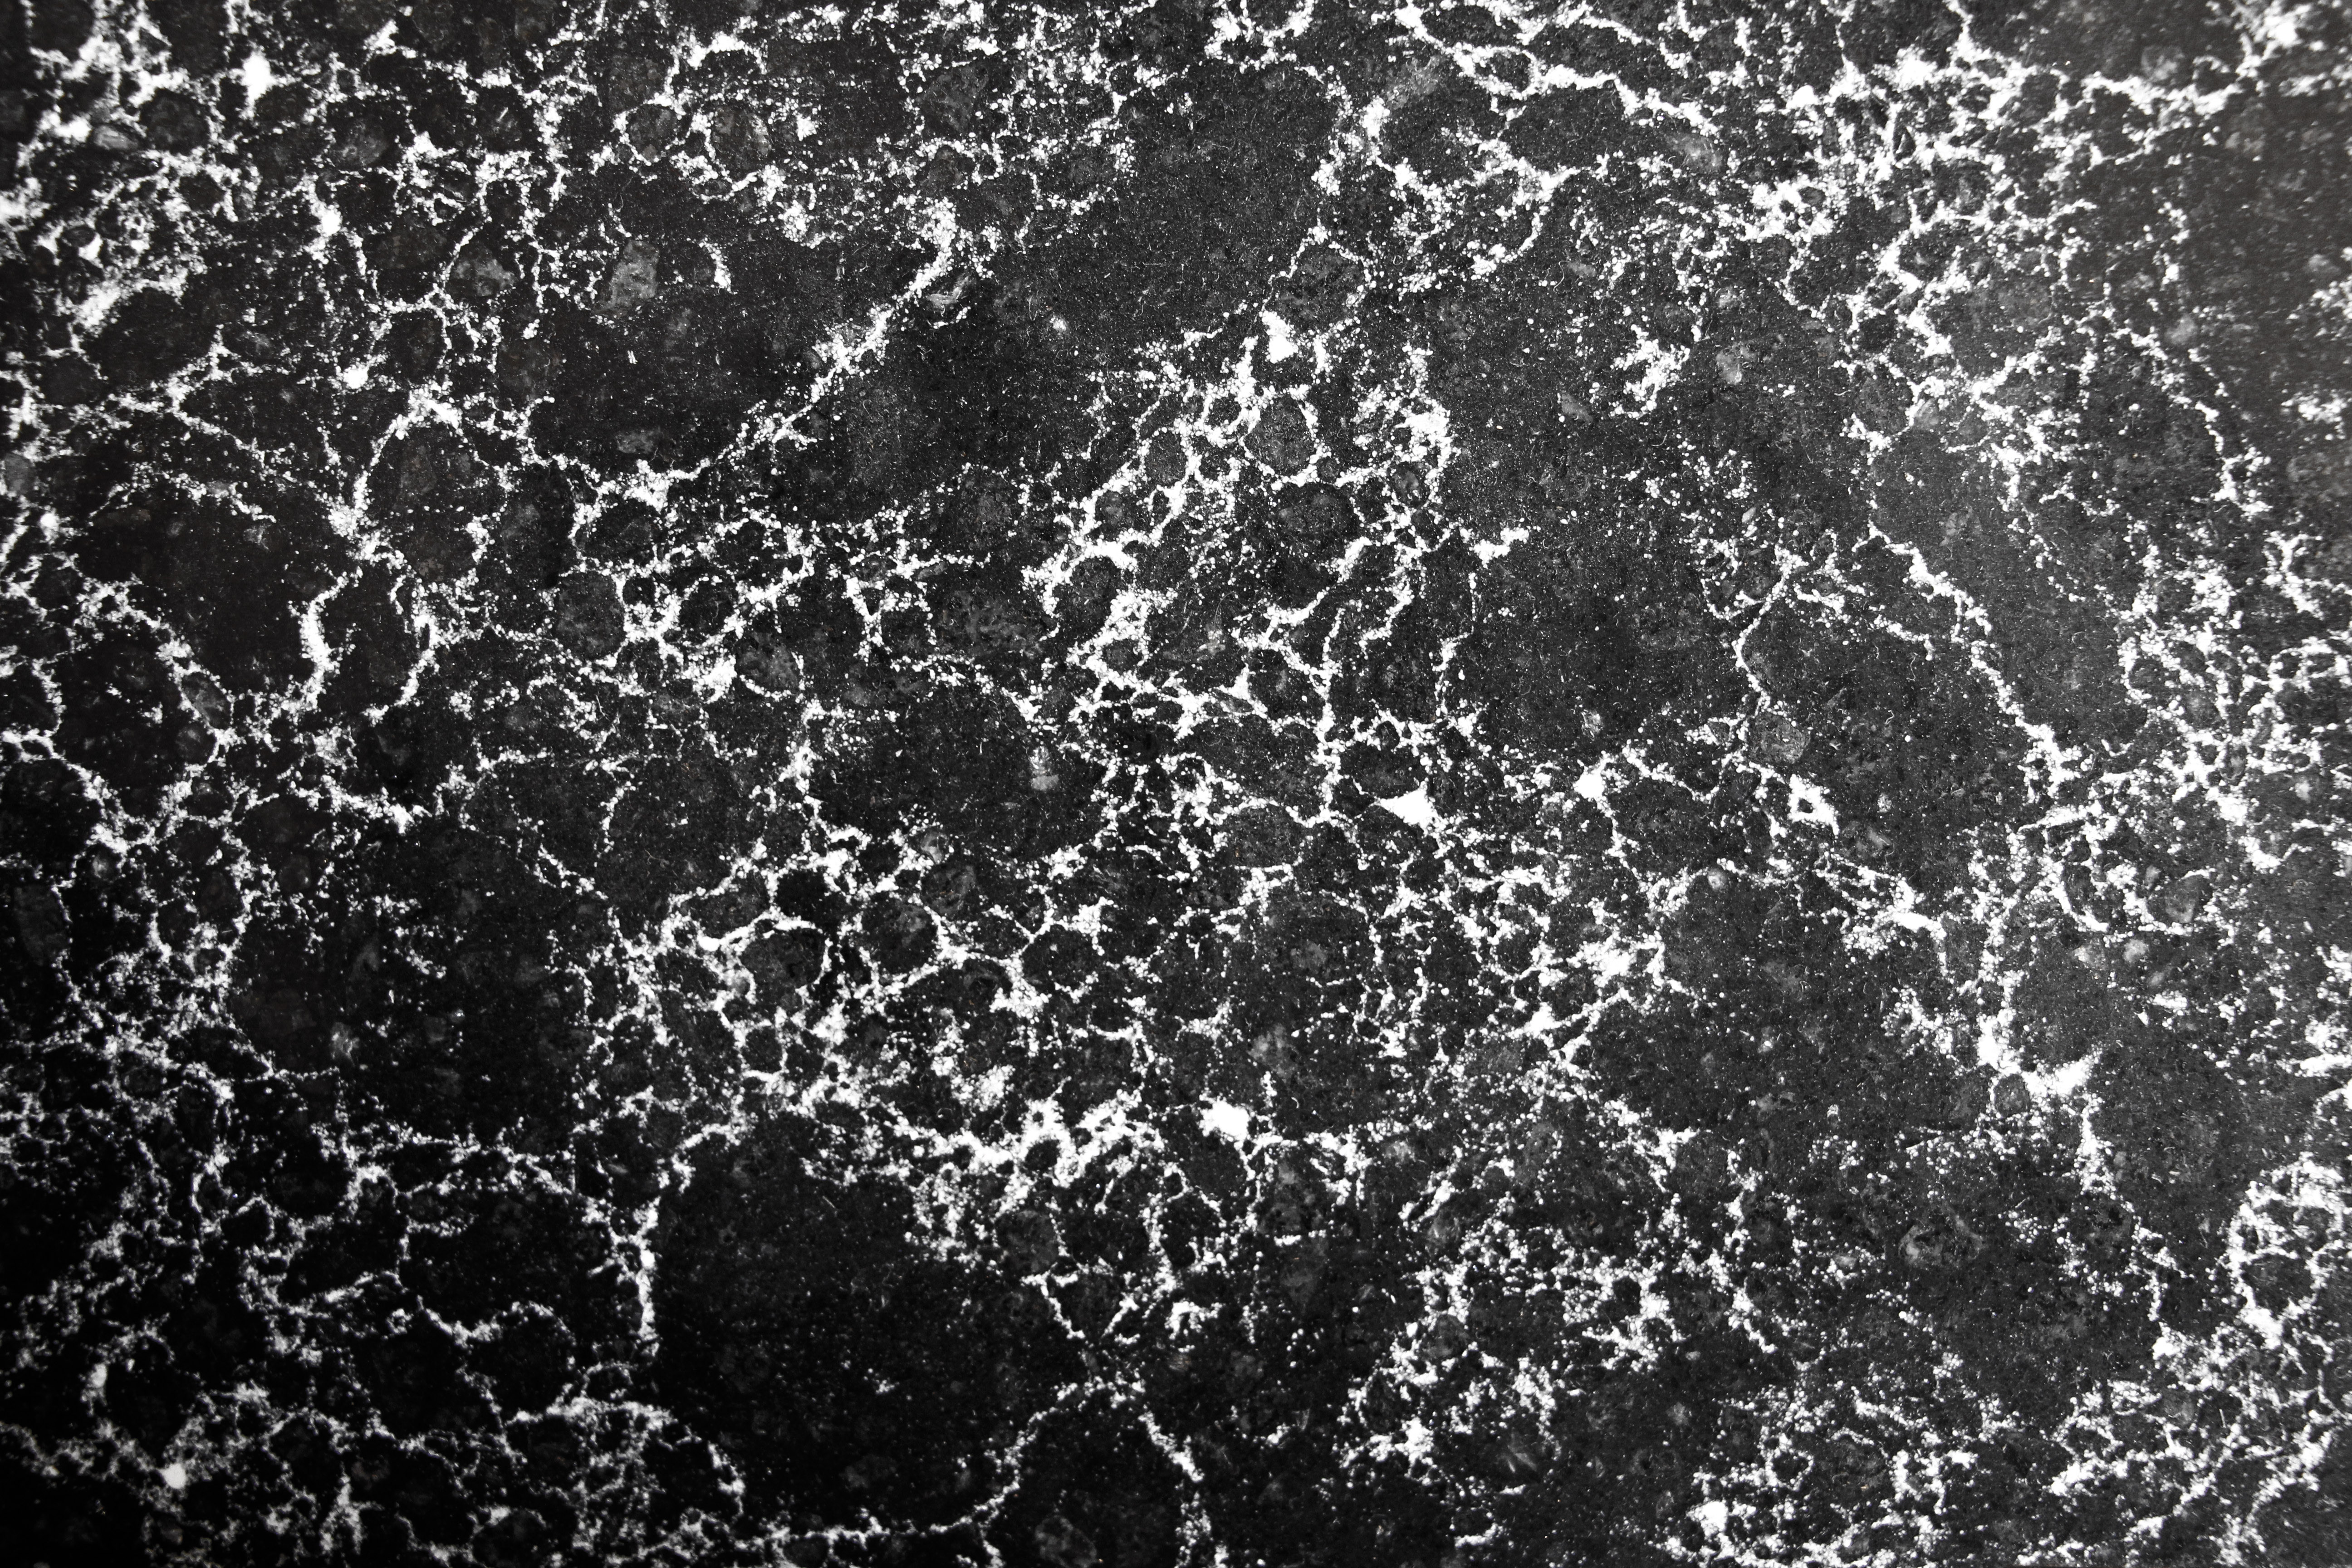 iPhoneXpaperscom  iPhone X wallpaper  vi74stone rocksbeachnaturepatterndark